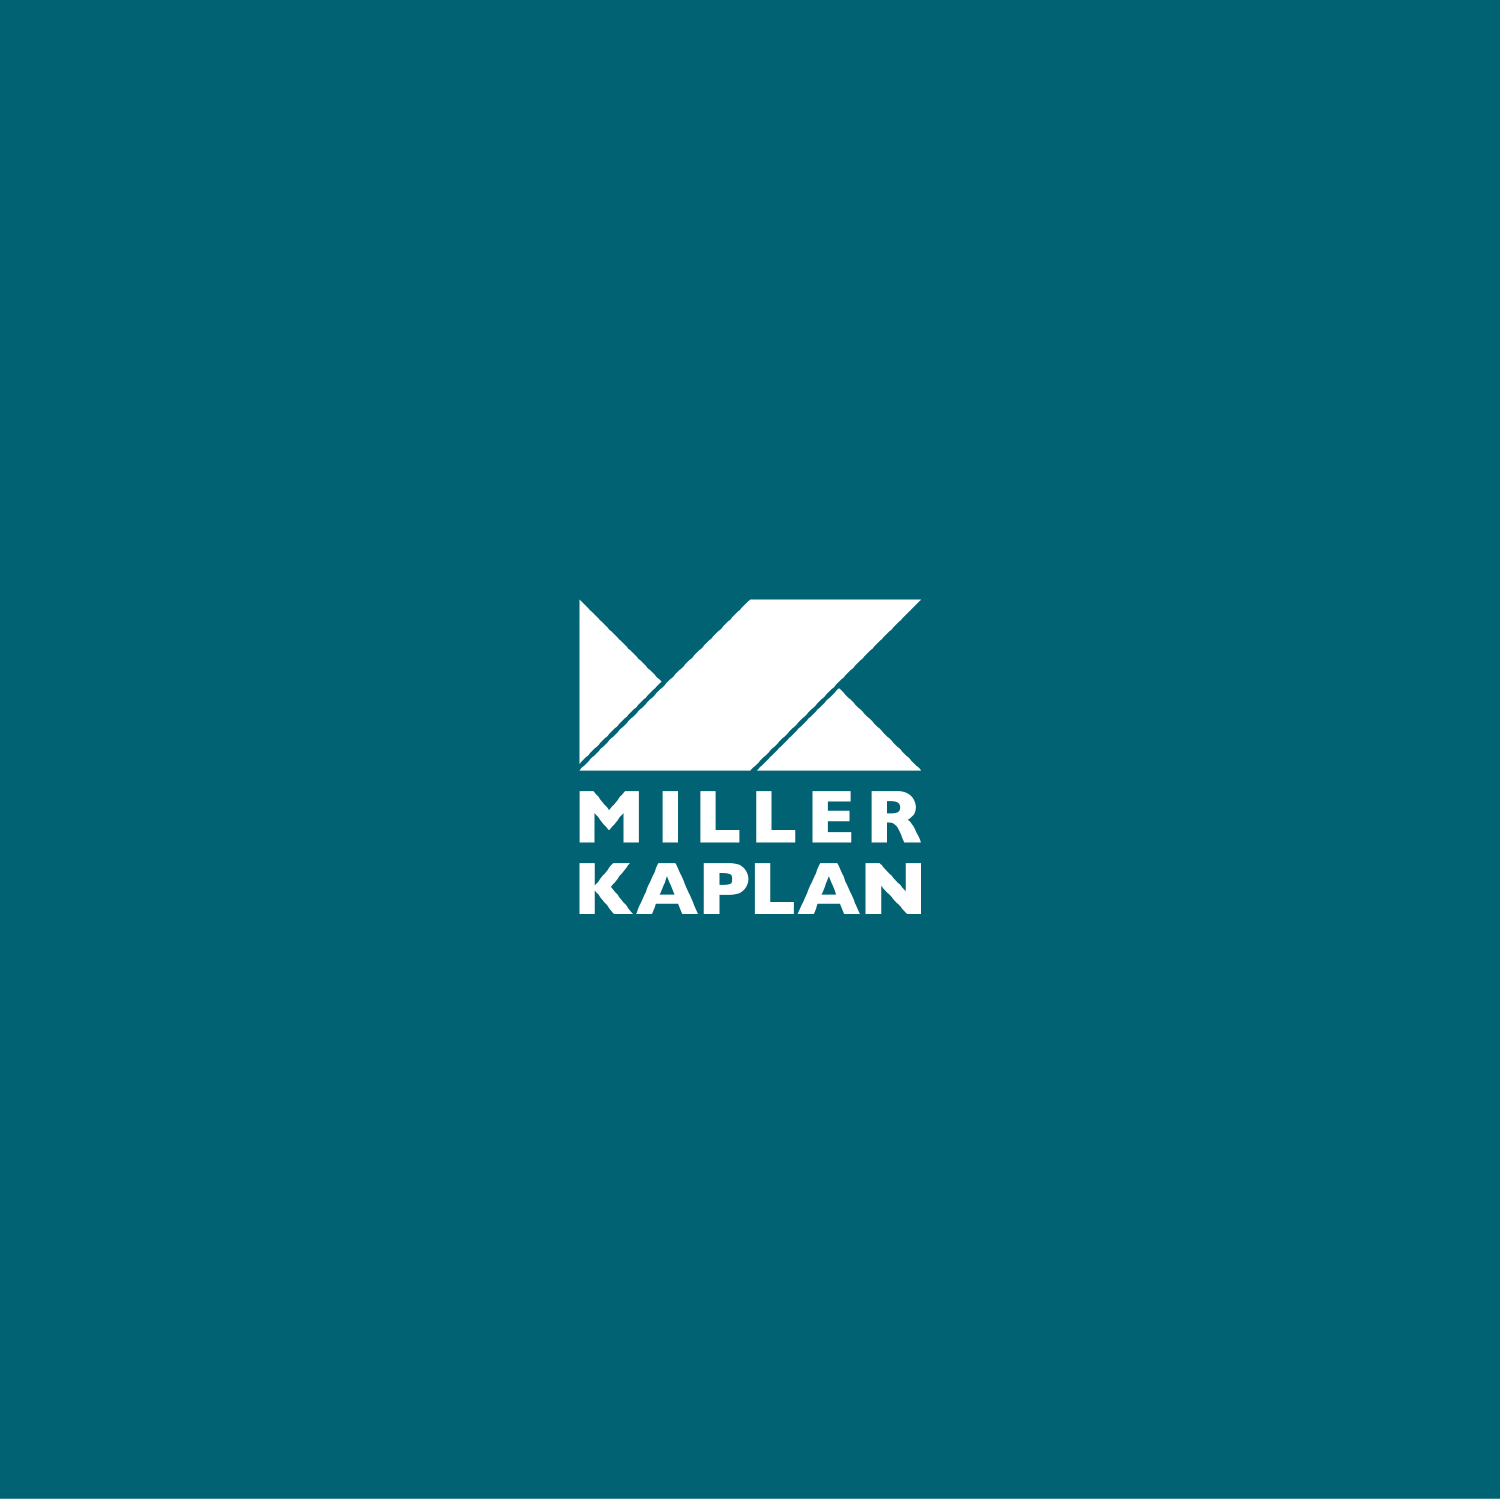 Miller Kaplan expands media practice